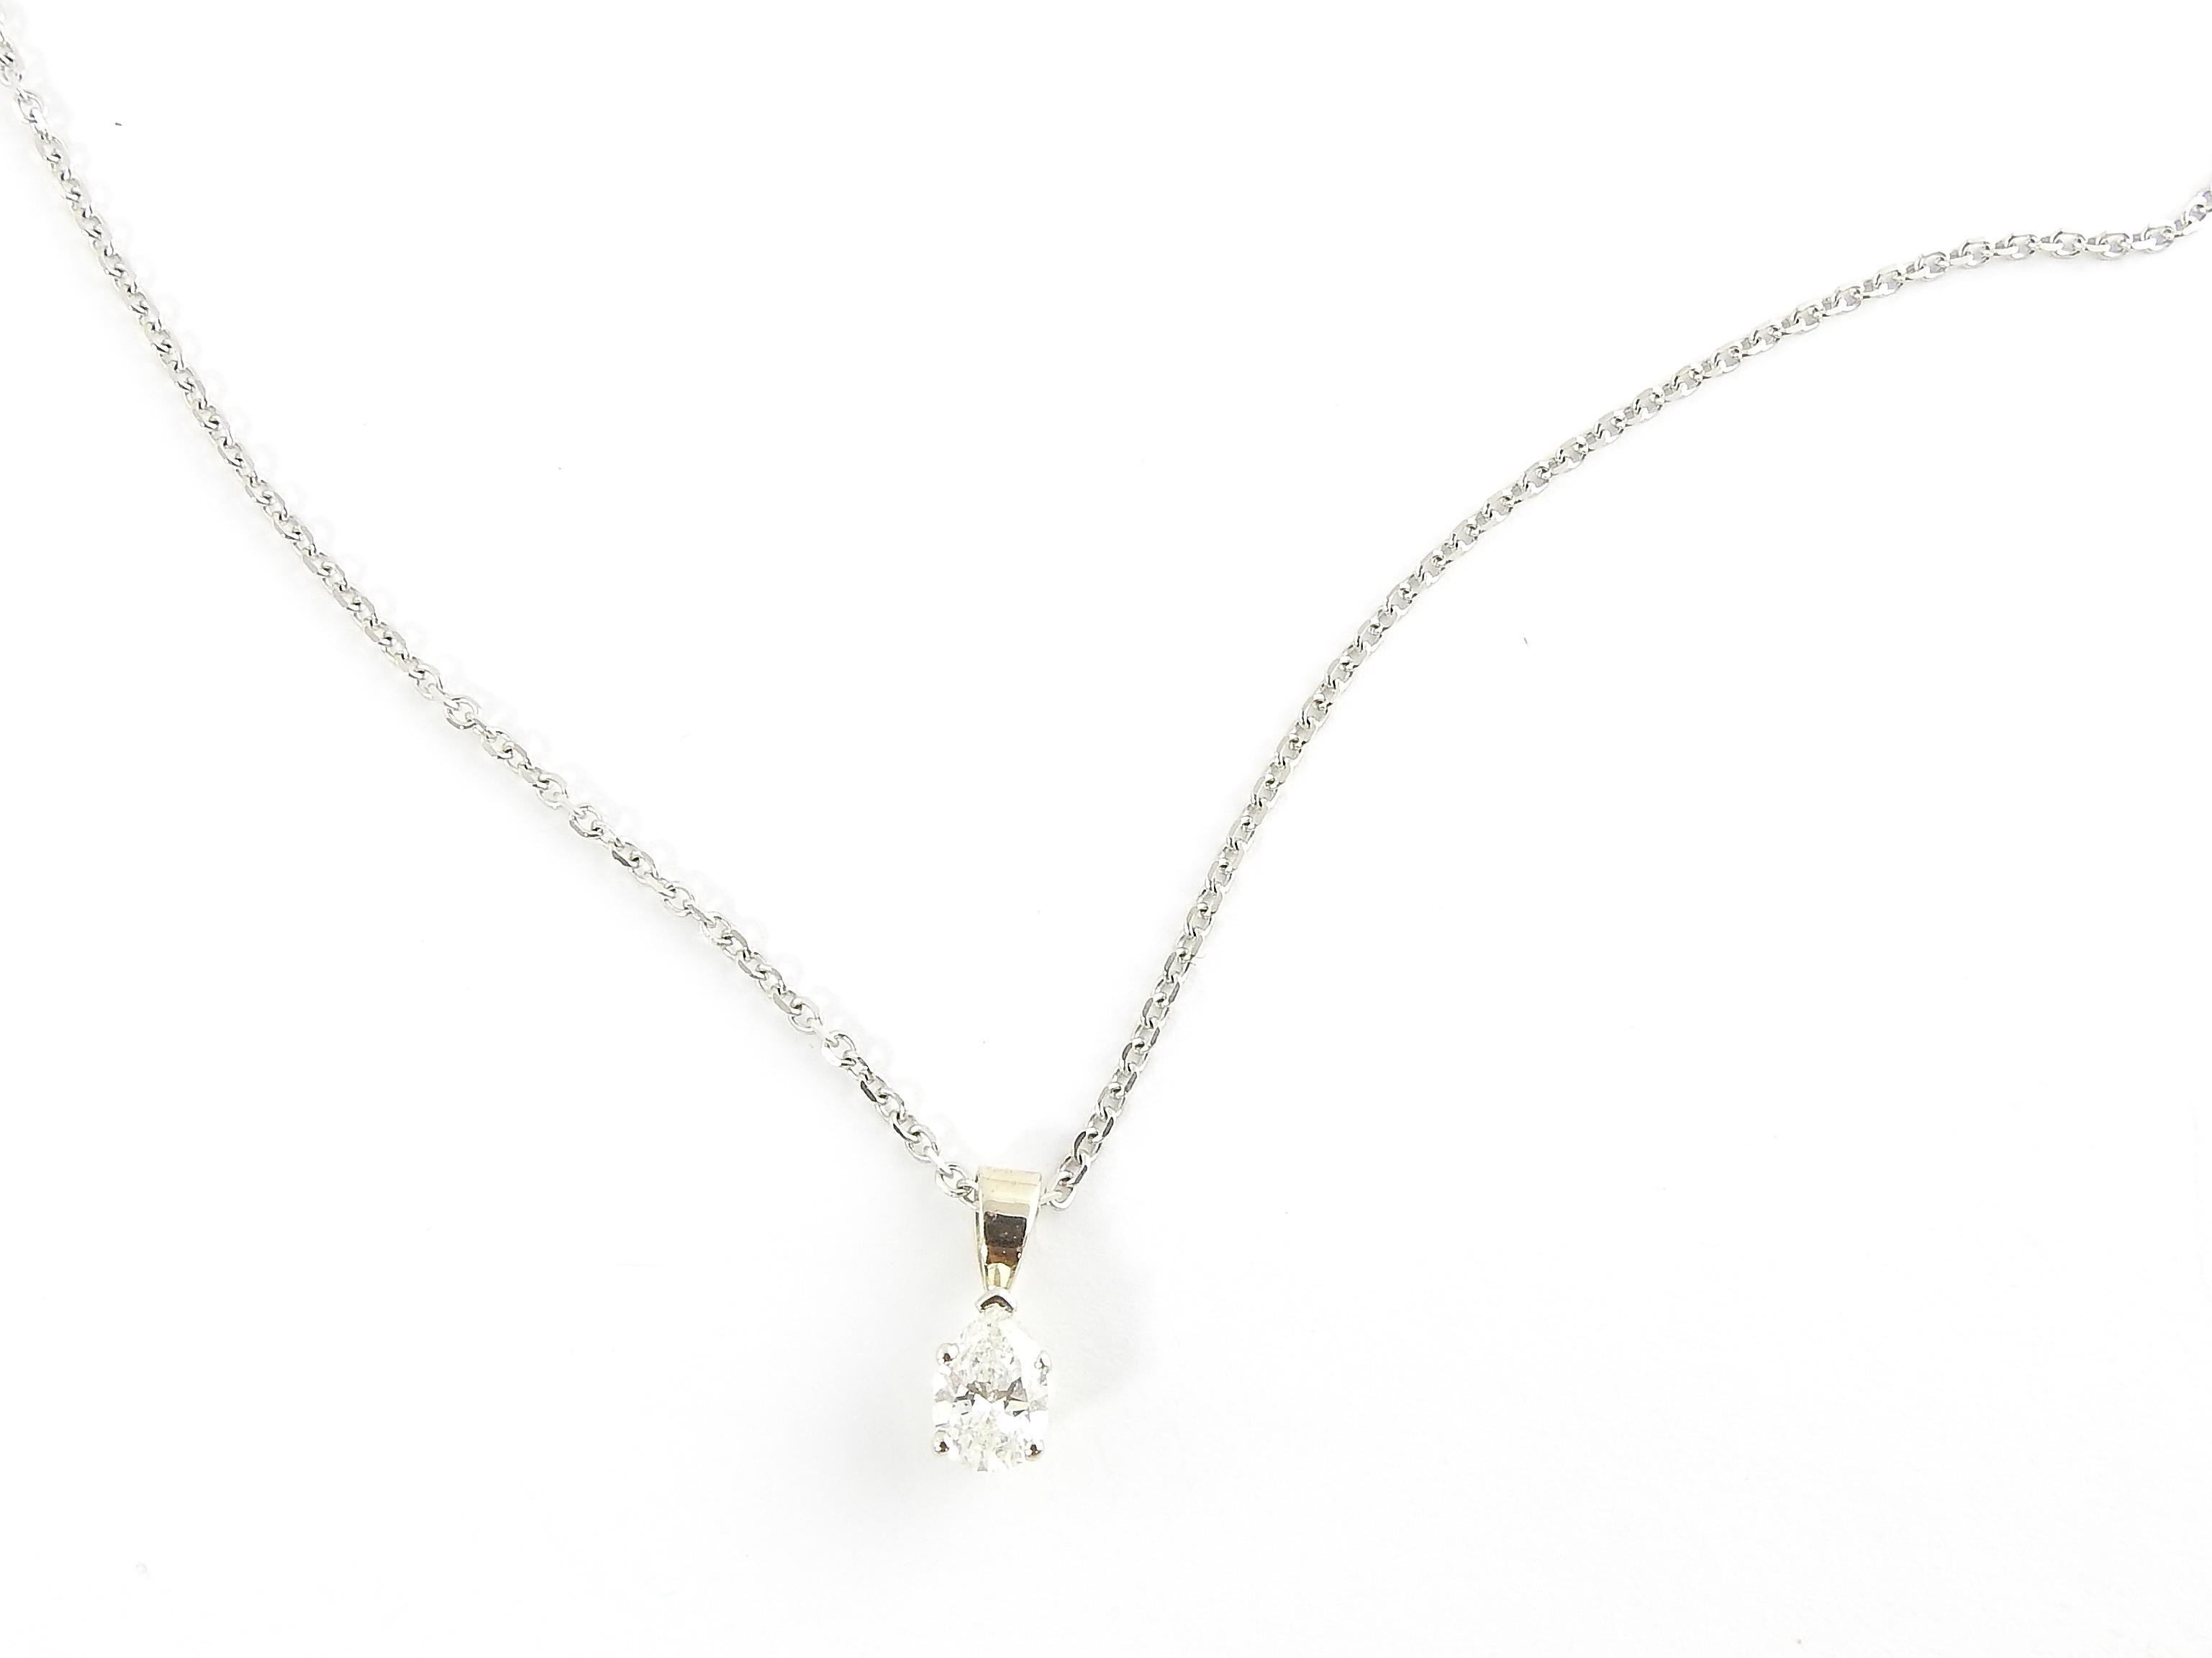 Pear Cut 14 Karat White Gold Pear Shaped Diamond Pendant Necklace .71 Carat